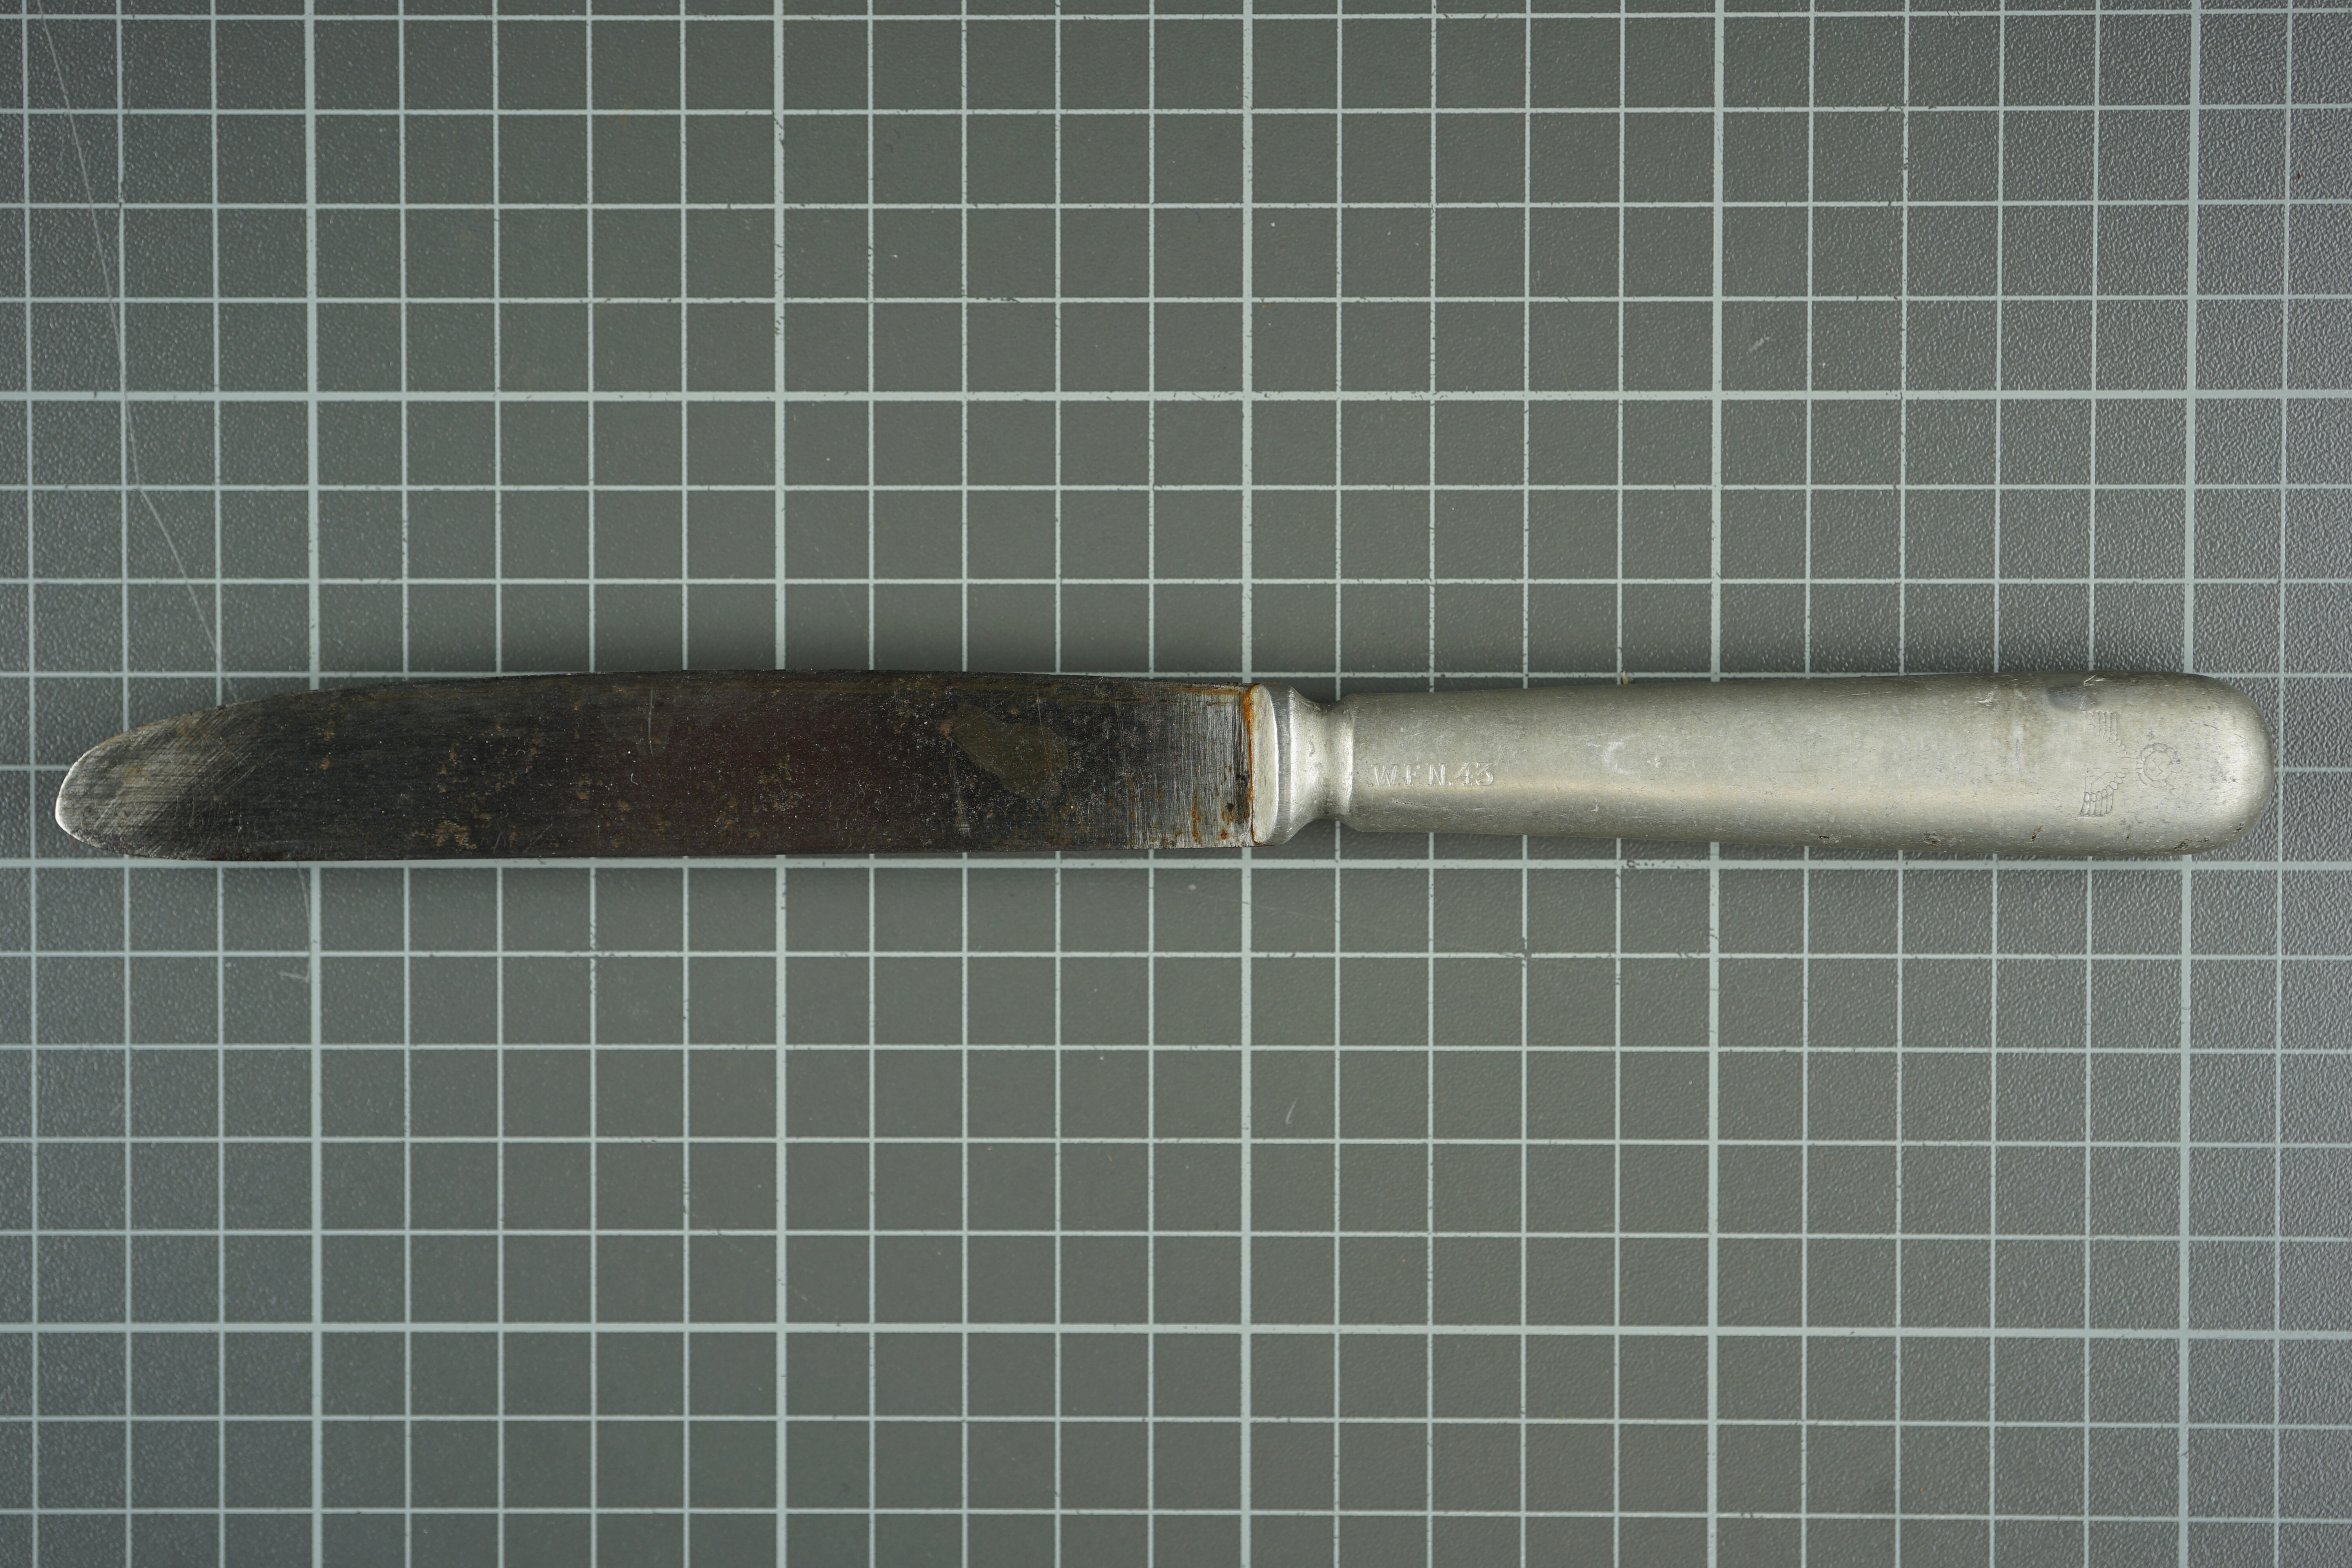 Messer (Museum für russlanddeutsche Kulturgeschichte CC BY-NC-SA)